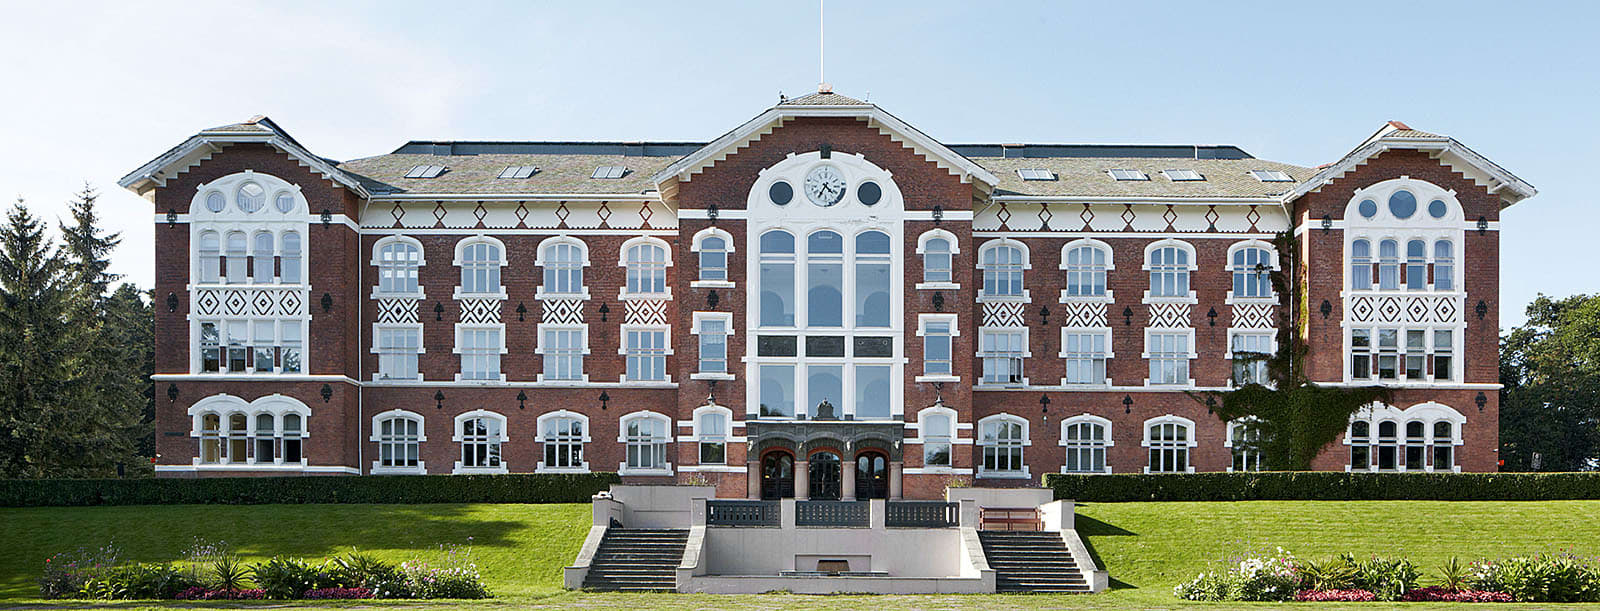 Norwegian University of Life Sciences NMBU in Norway - Master Degrees